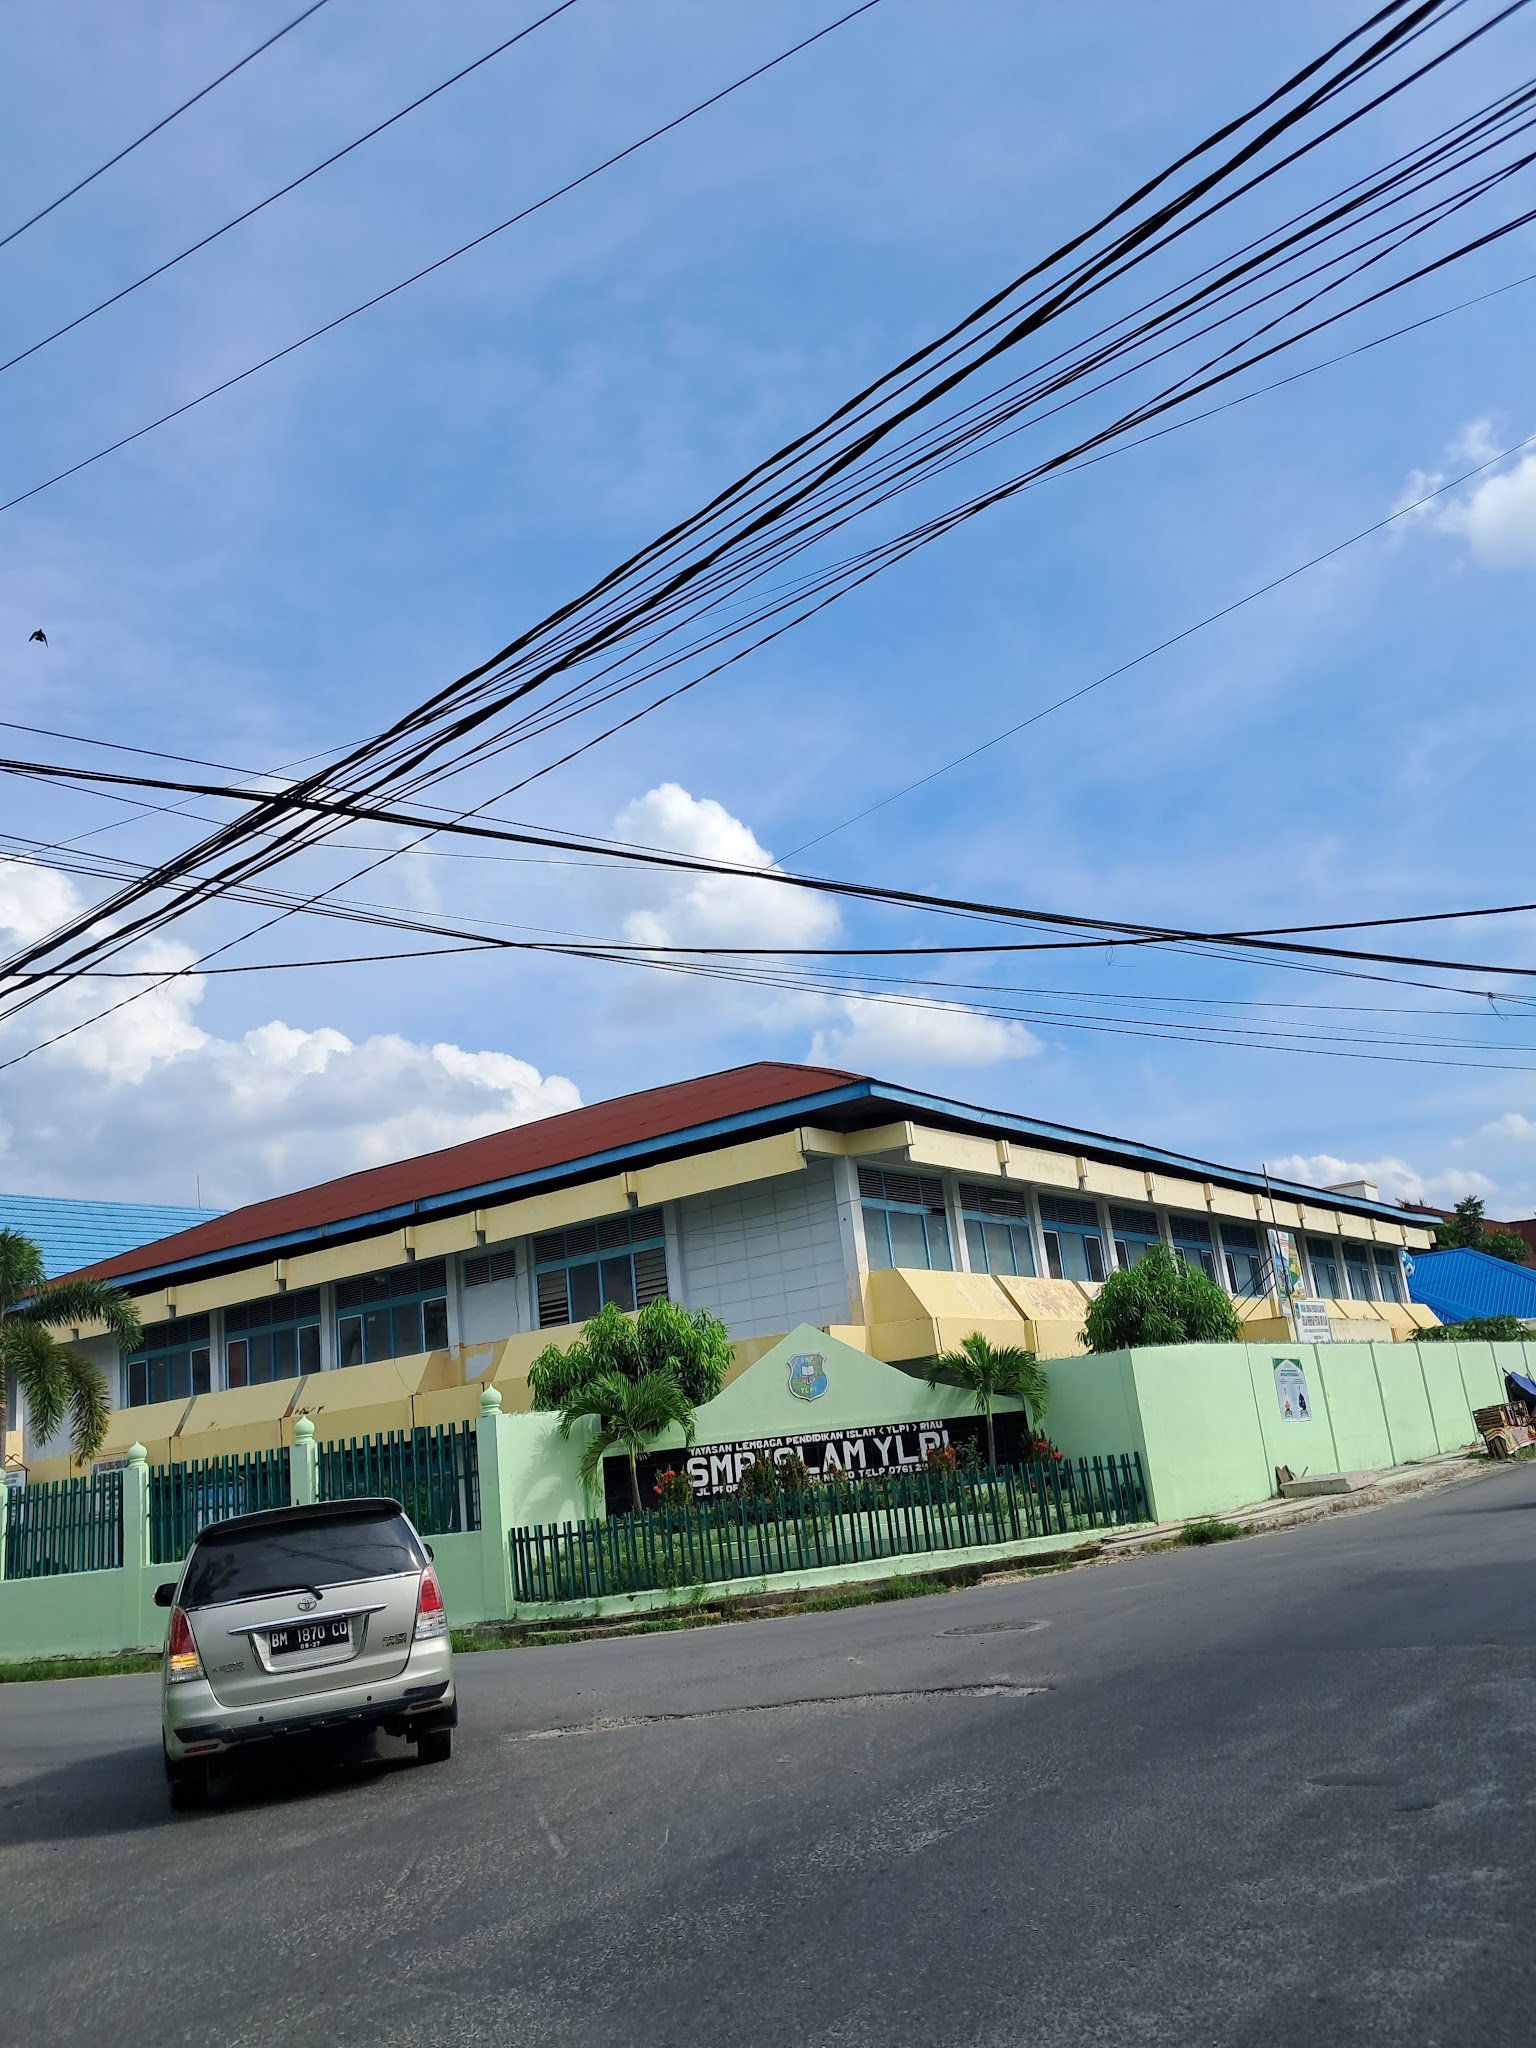 Foto SMP  Islam Ylpi Pekanbaru, Kota Pekanbaru